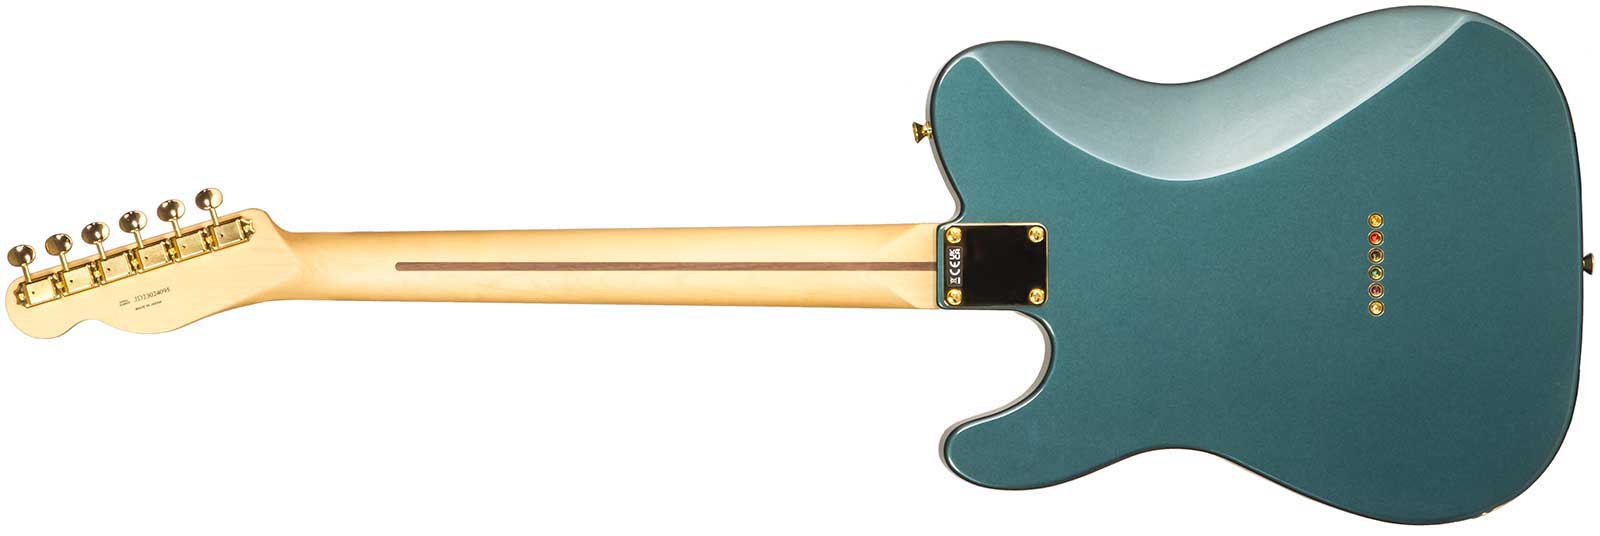 Fender Tele Hybrid Ii Jap 2s Ht Rw - Sherwood Green Metallic - Tel shape electric guitar - Variation 1